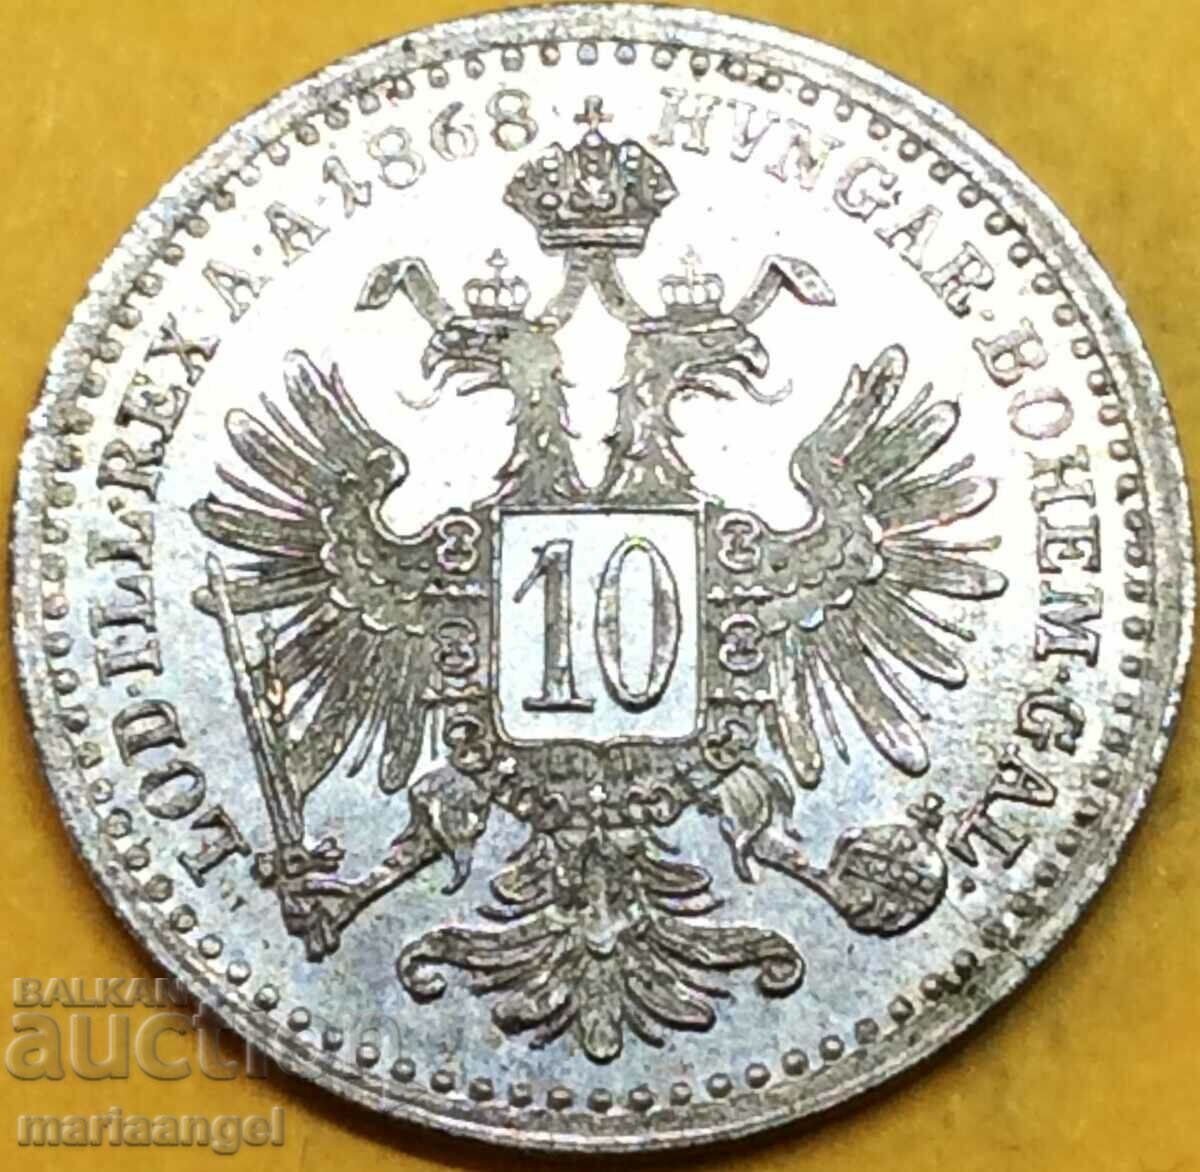 10 Kreuzer 1868 Ουγγαρία Franz Joseph Silver - αρκετά σπάνιο